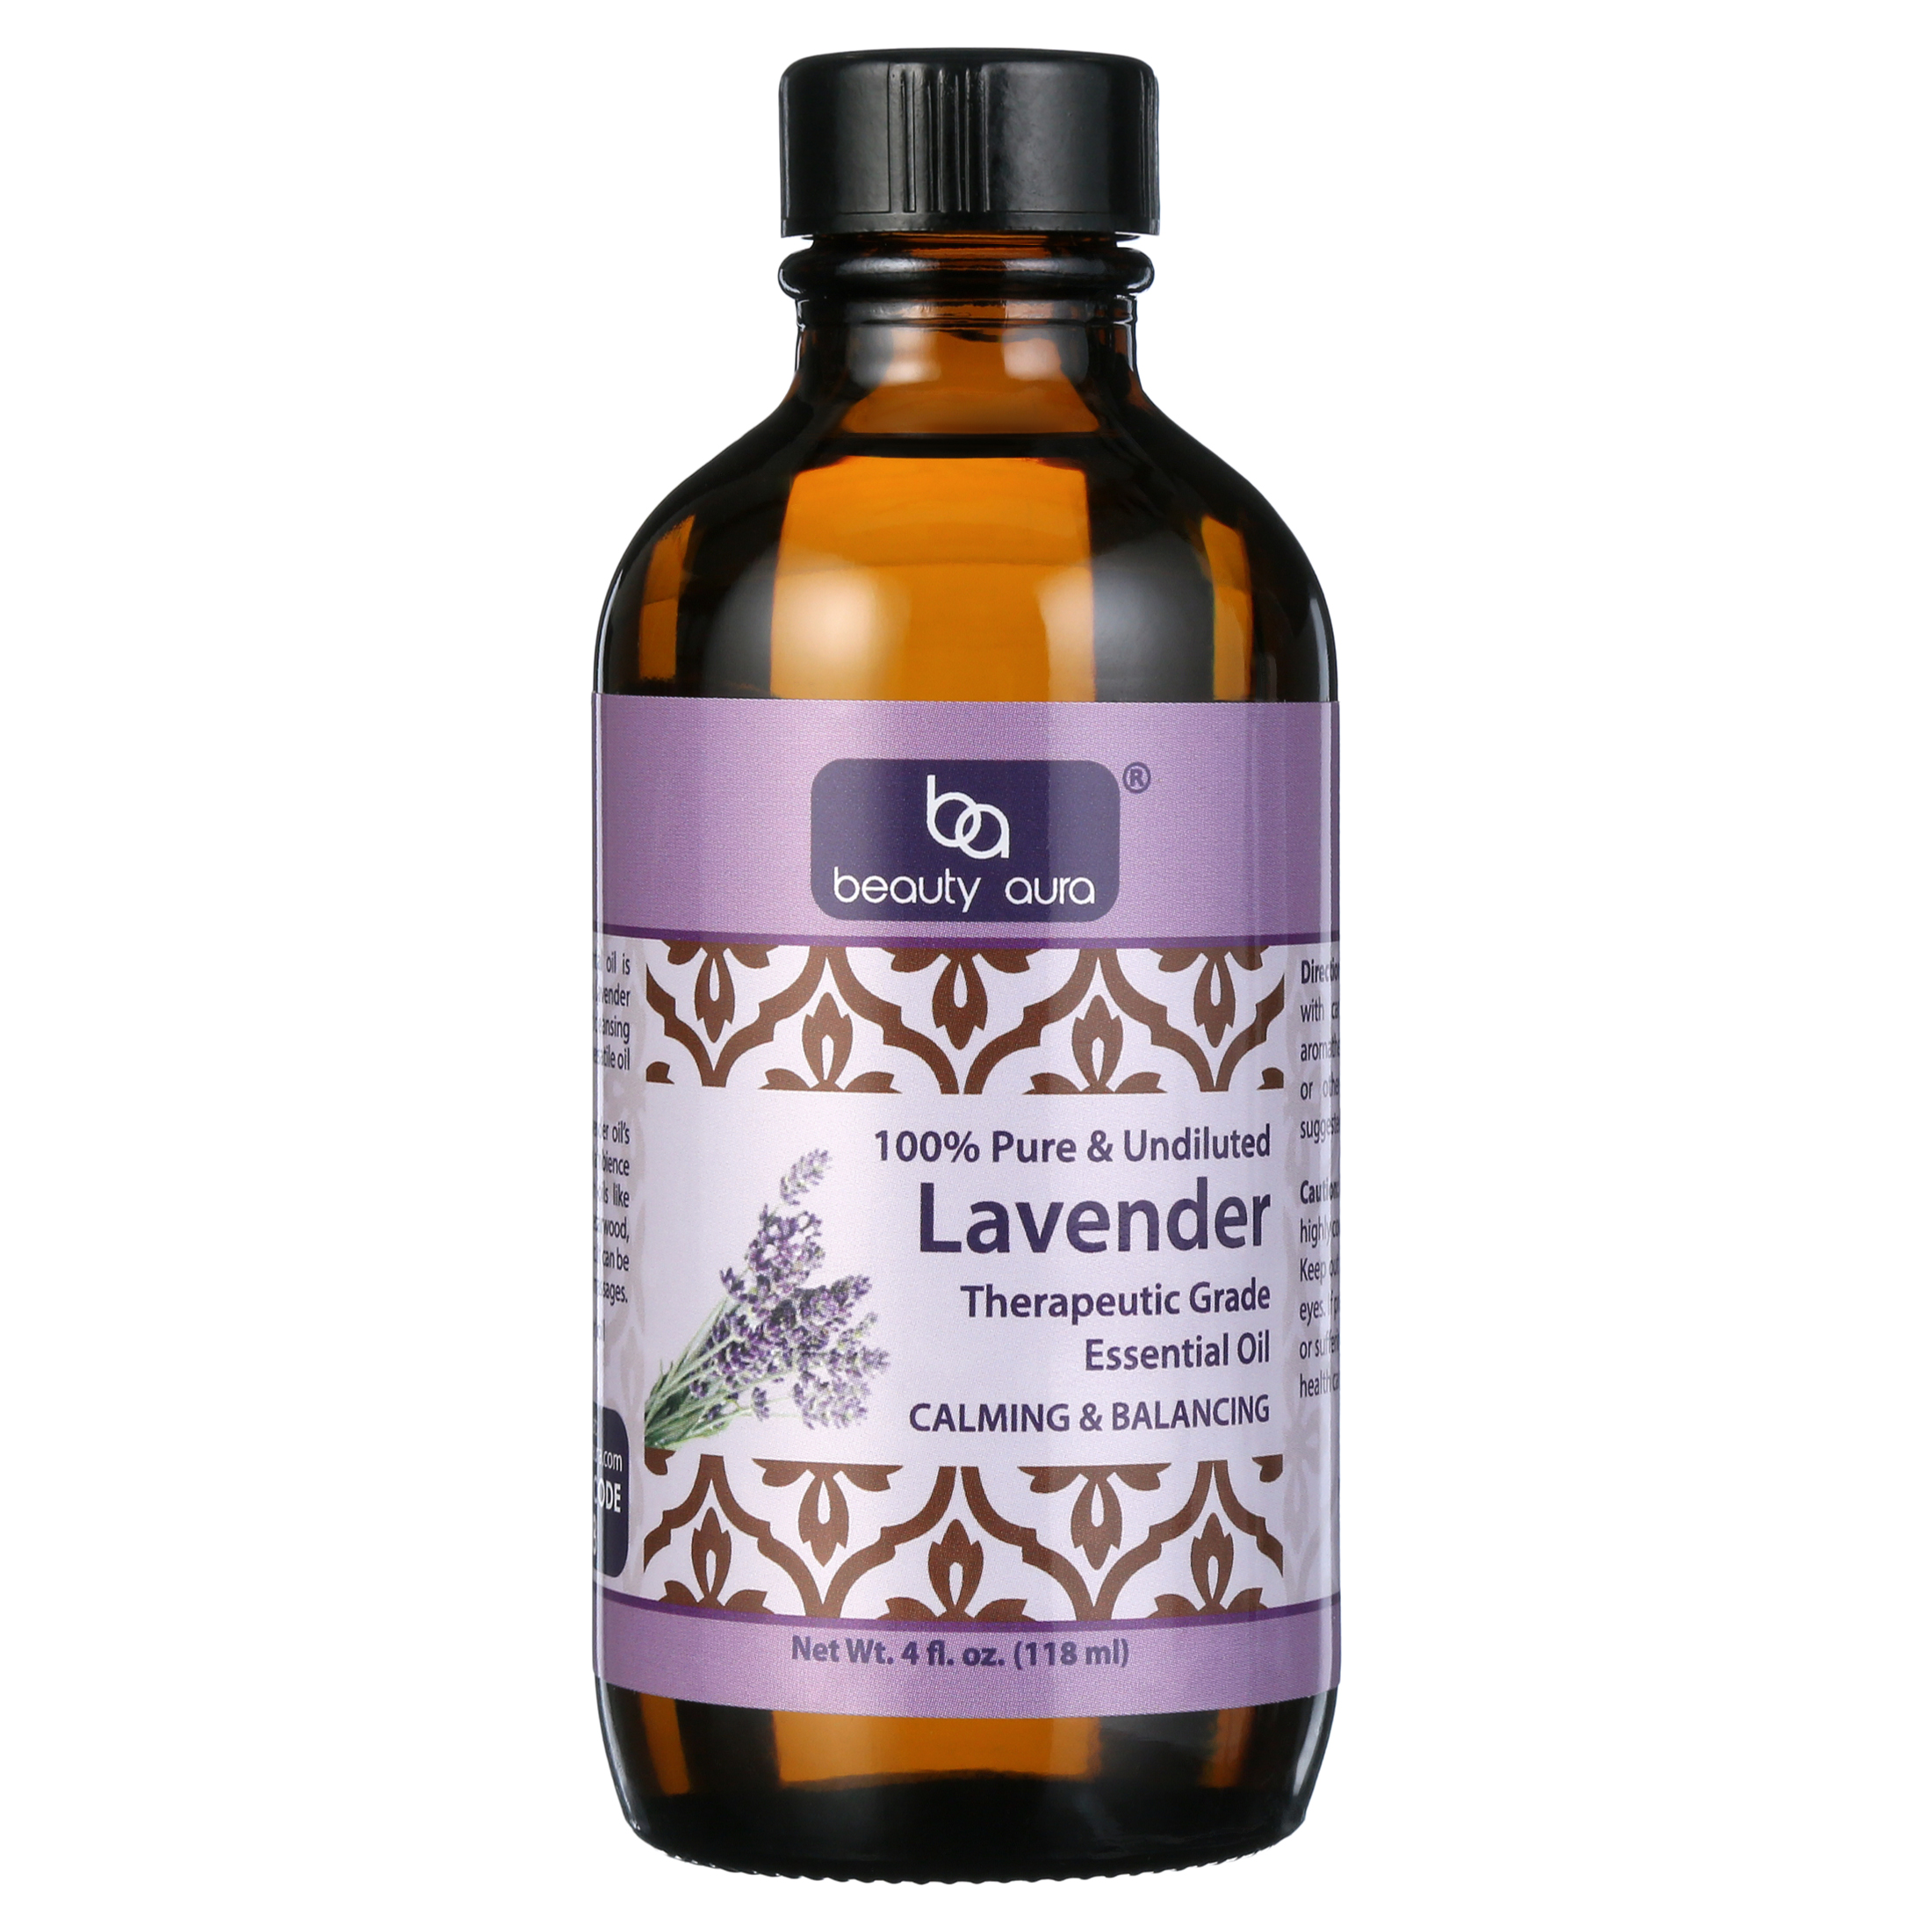 Beauty Aura Lavender Oil 4 Oz - image 1 of 6